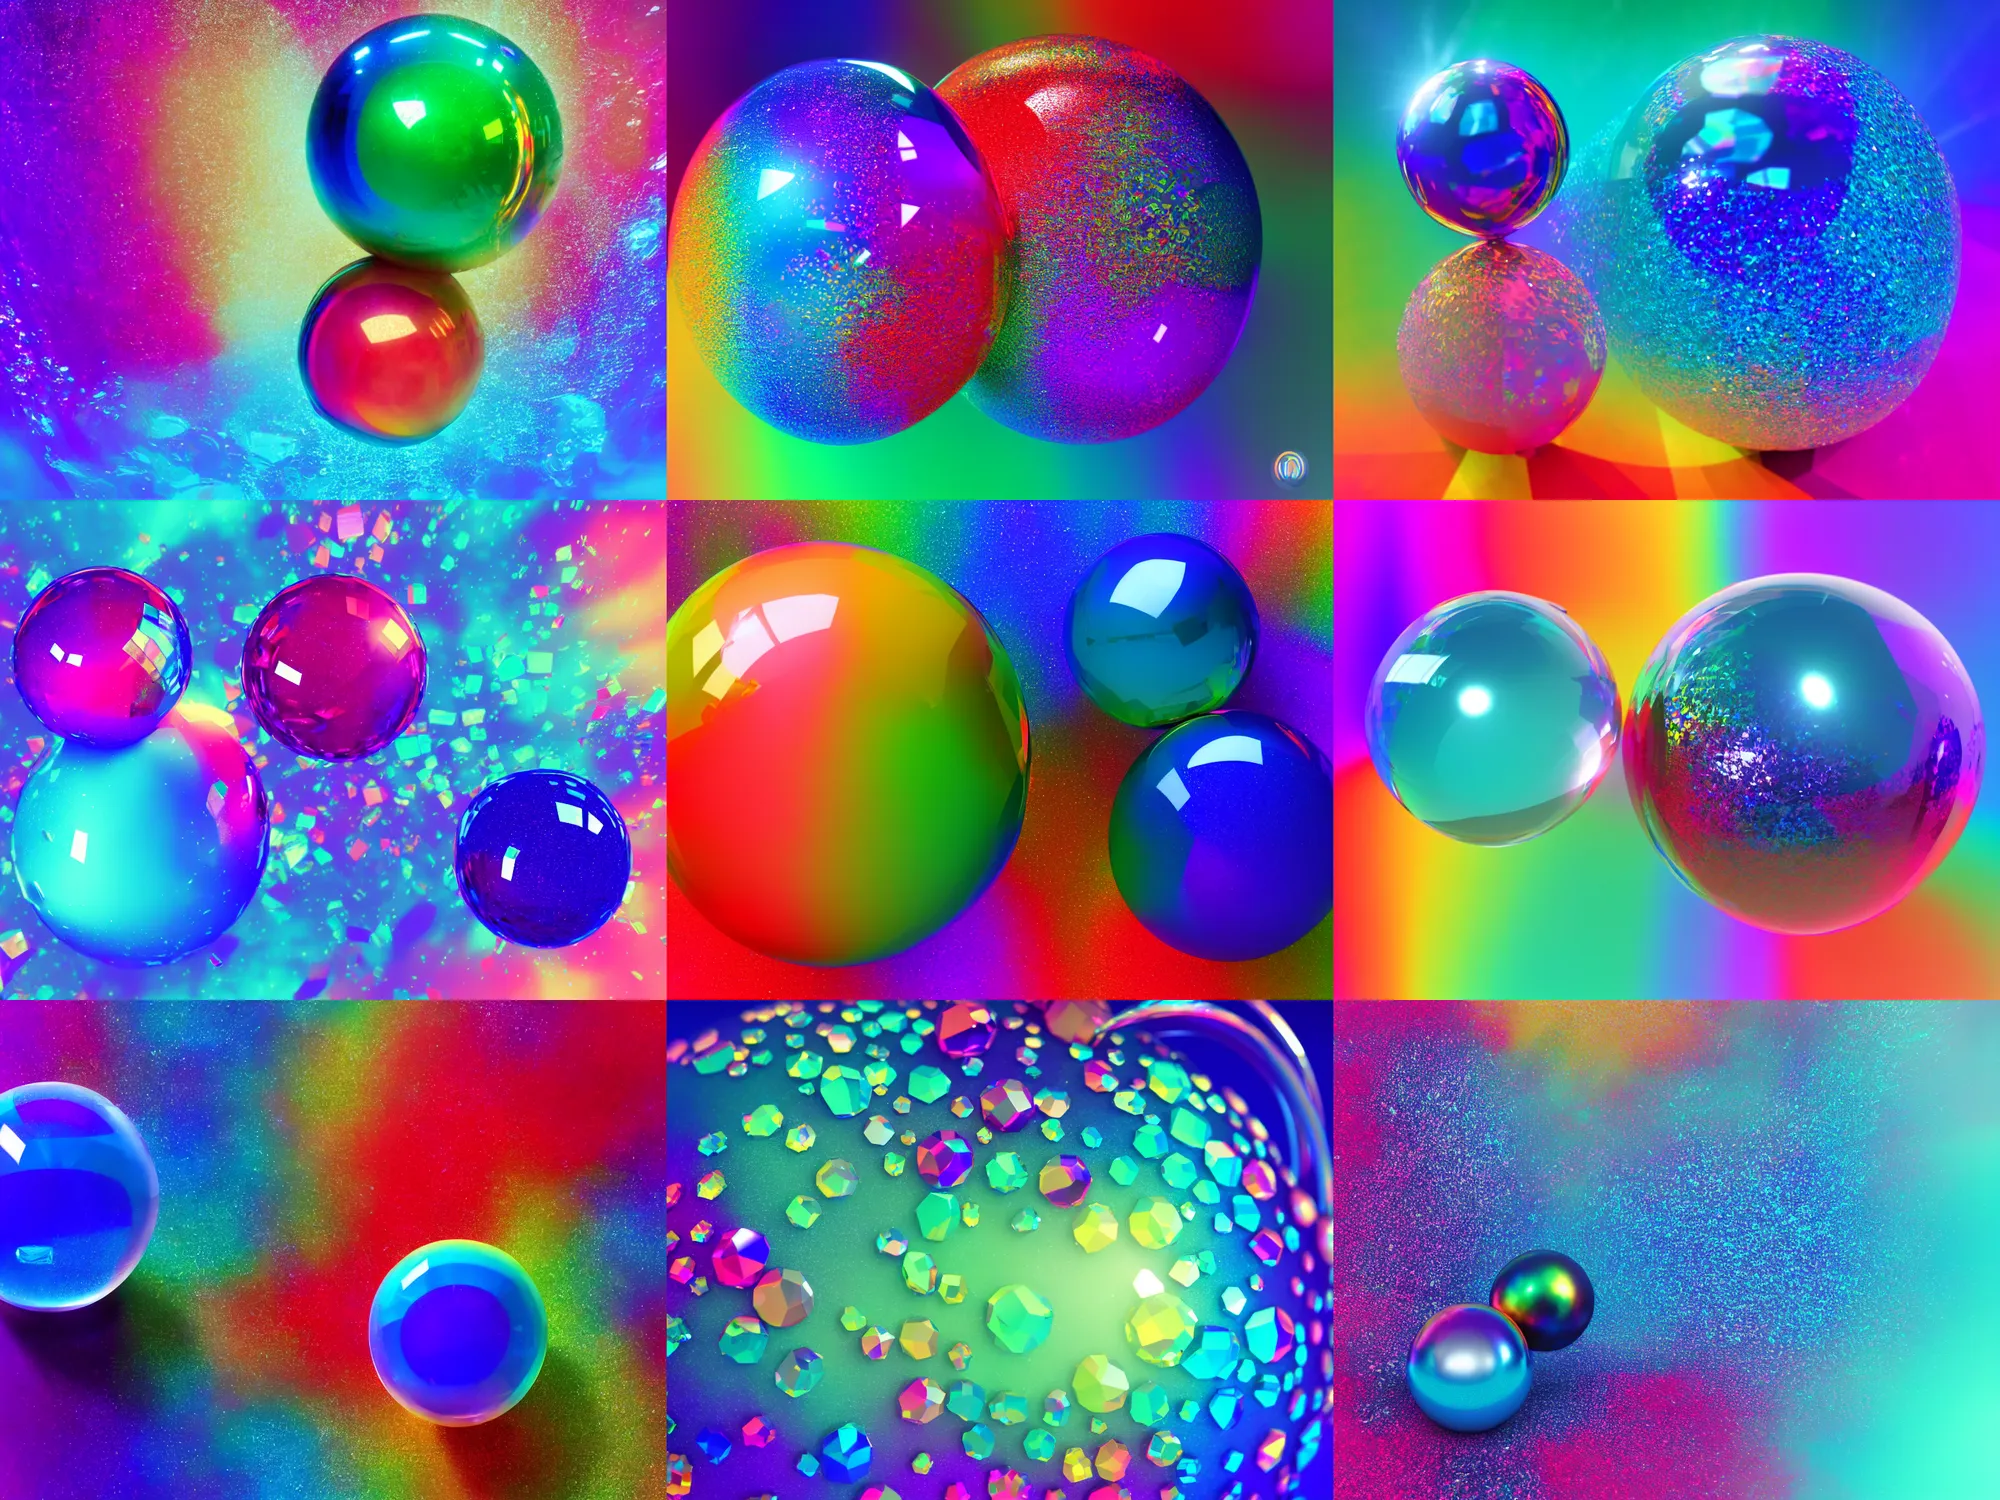 Prompt: sphere underwater + colorful rainbow sphere with sharp iridescent crystals around it, 4 k, award winning, photorealistic, sharp crisp light reflections, rule of thirds, octane render, volumetric lighting